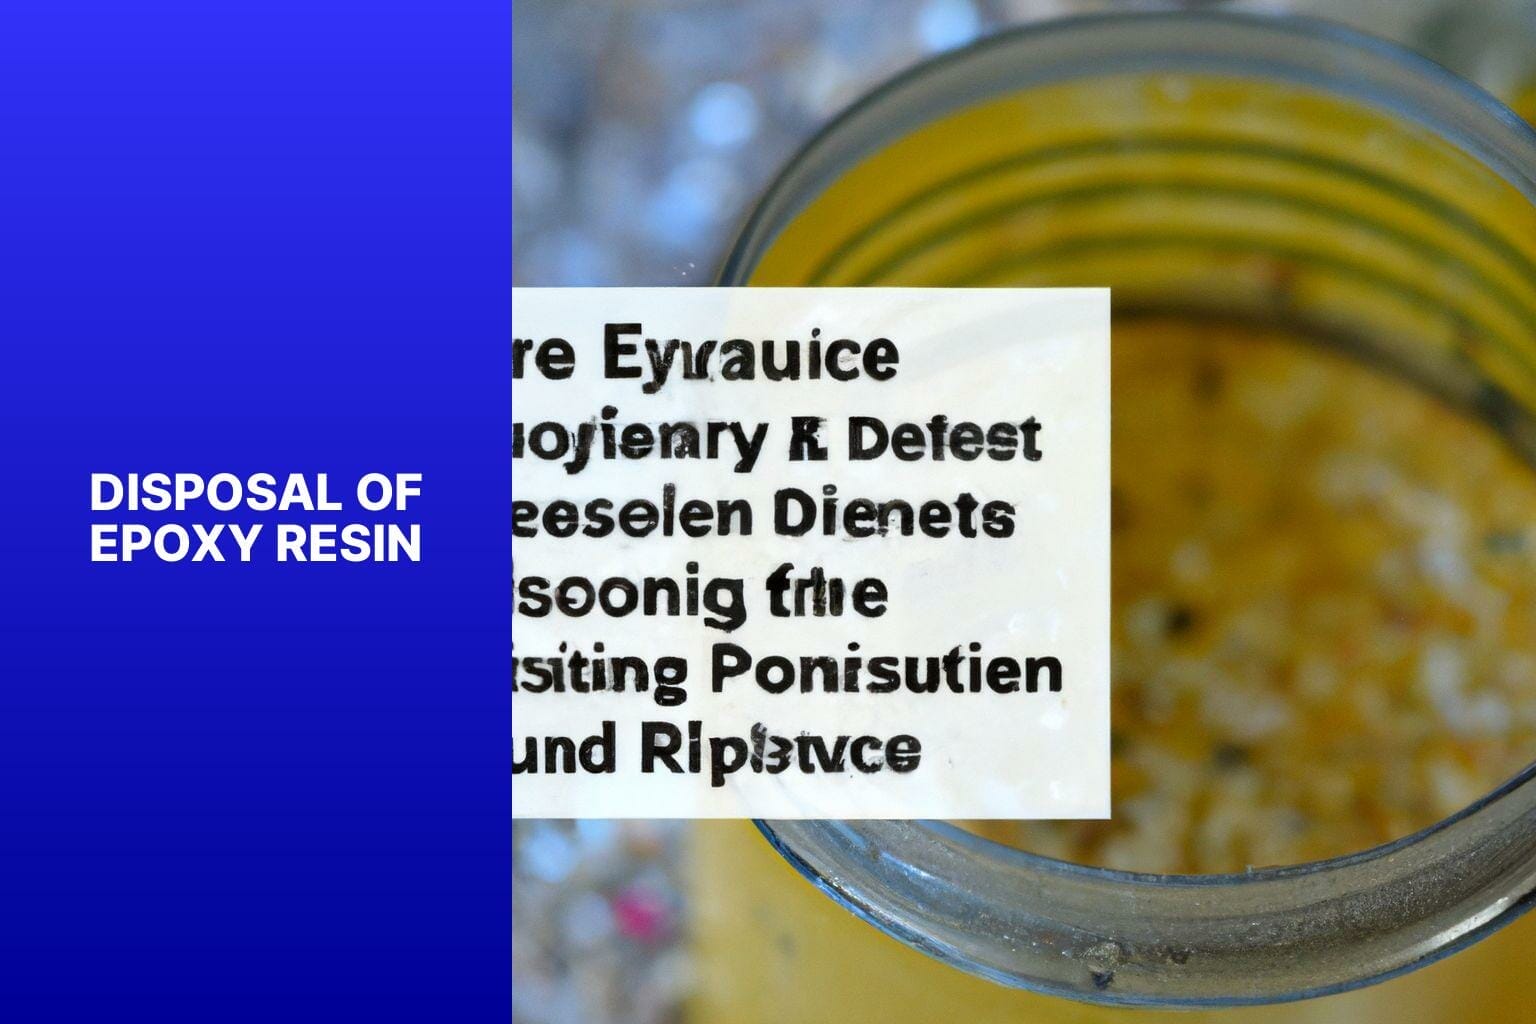 Disposal of Epoxy Resin - is epoxy resin hazardous 